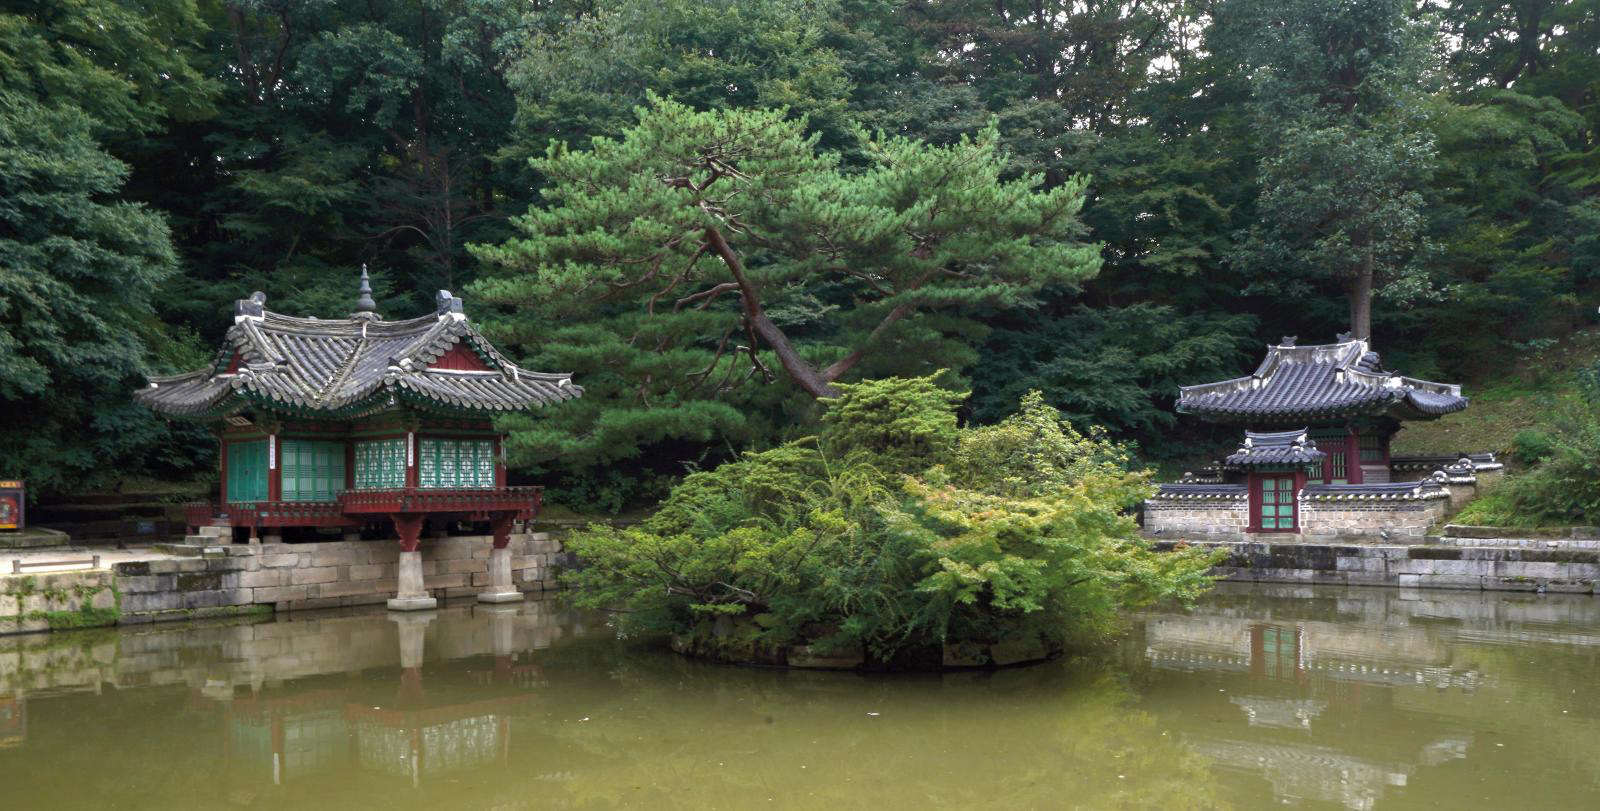 The huwon or "back garden", the Buyongjeong and Sajeonggibigak pavilions around the Buyongji lake.Courtesy of Kocis. Photo © Seokyong Lee/